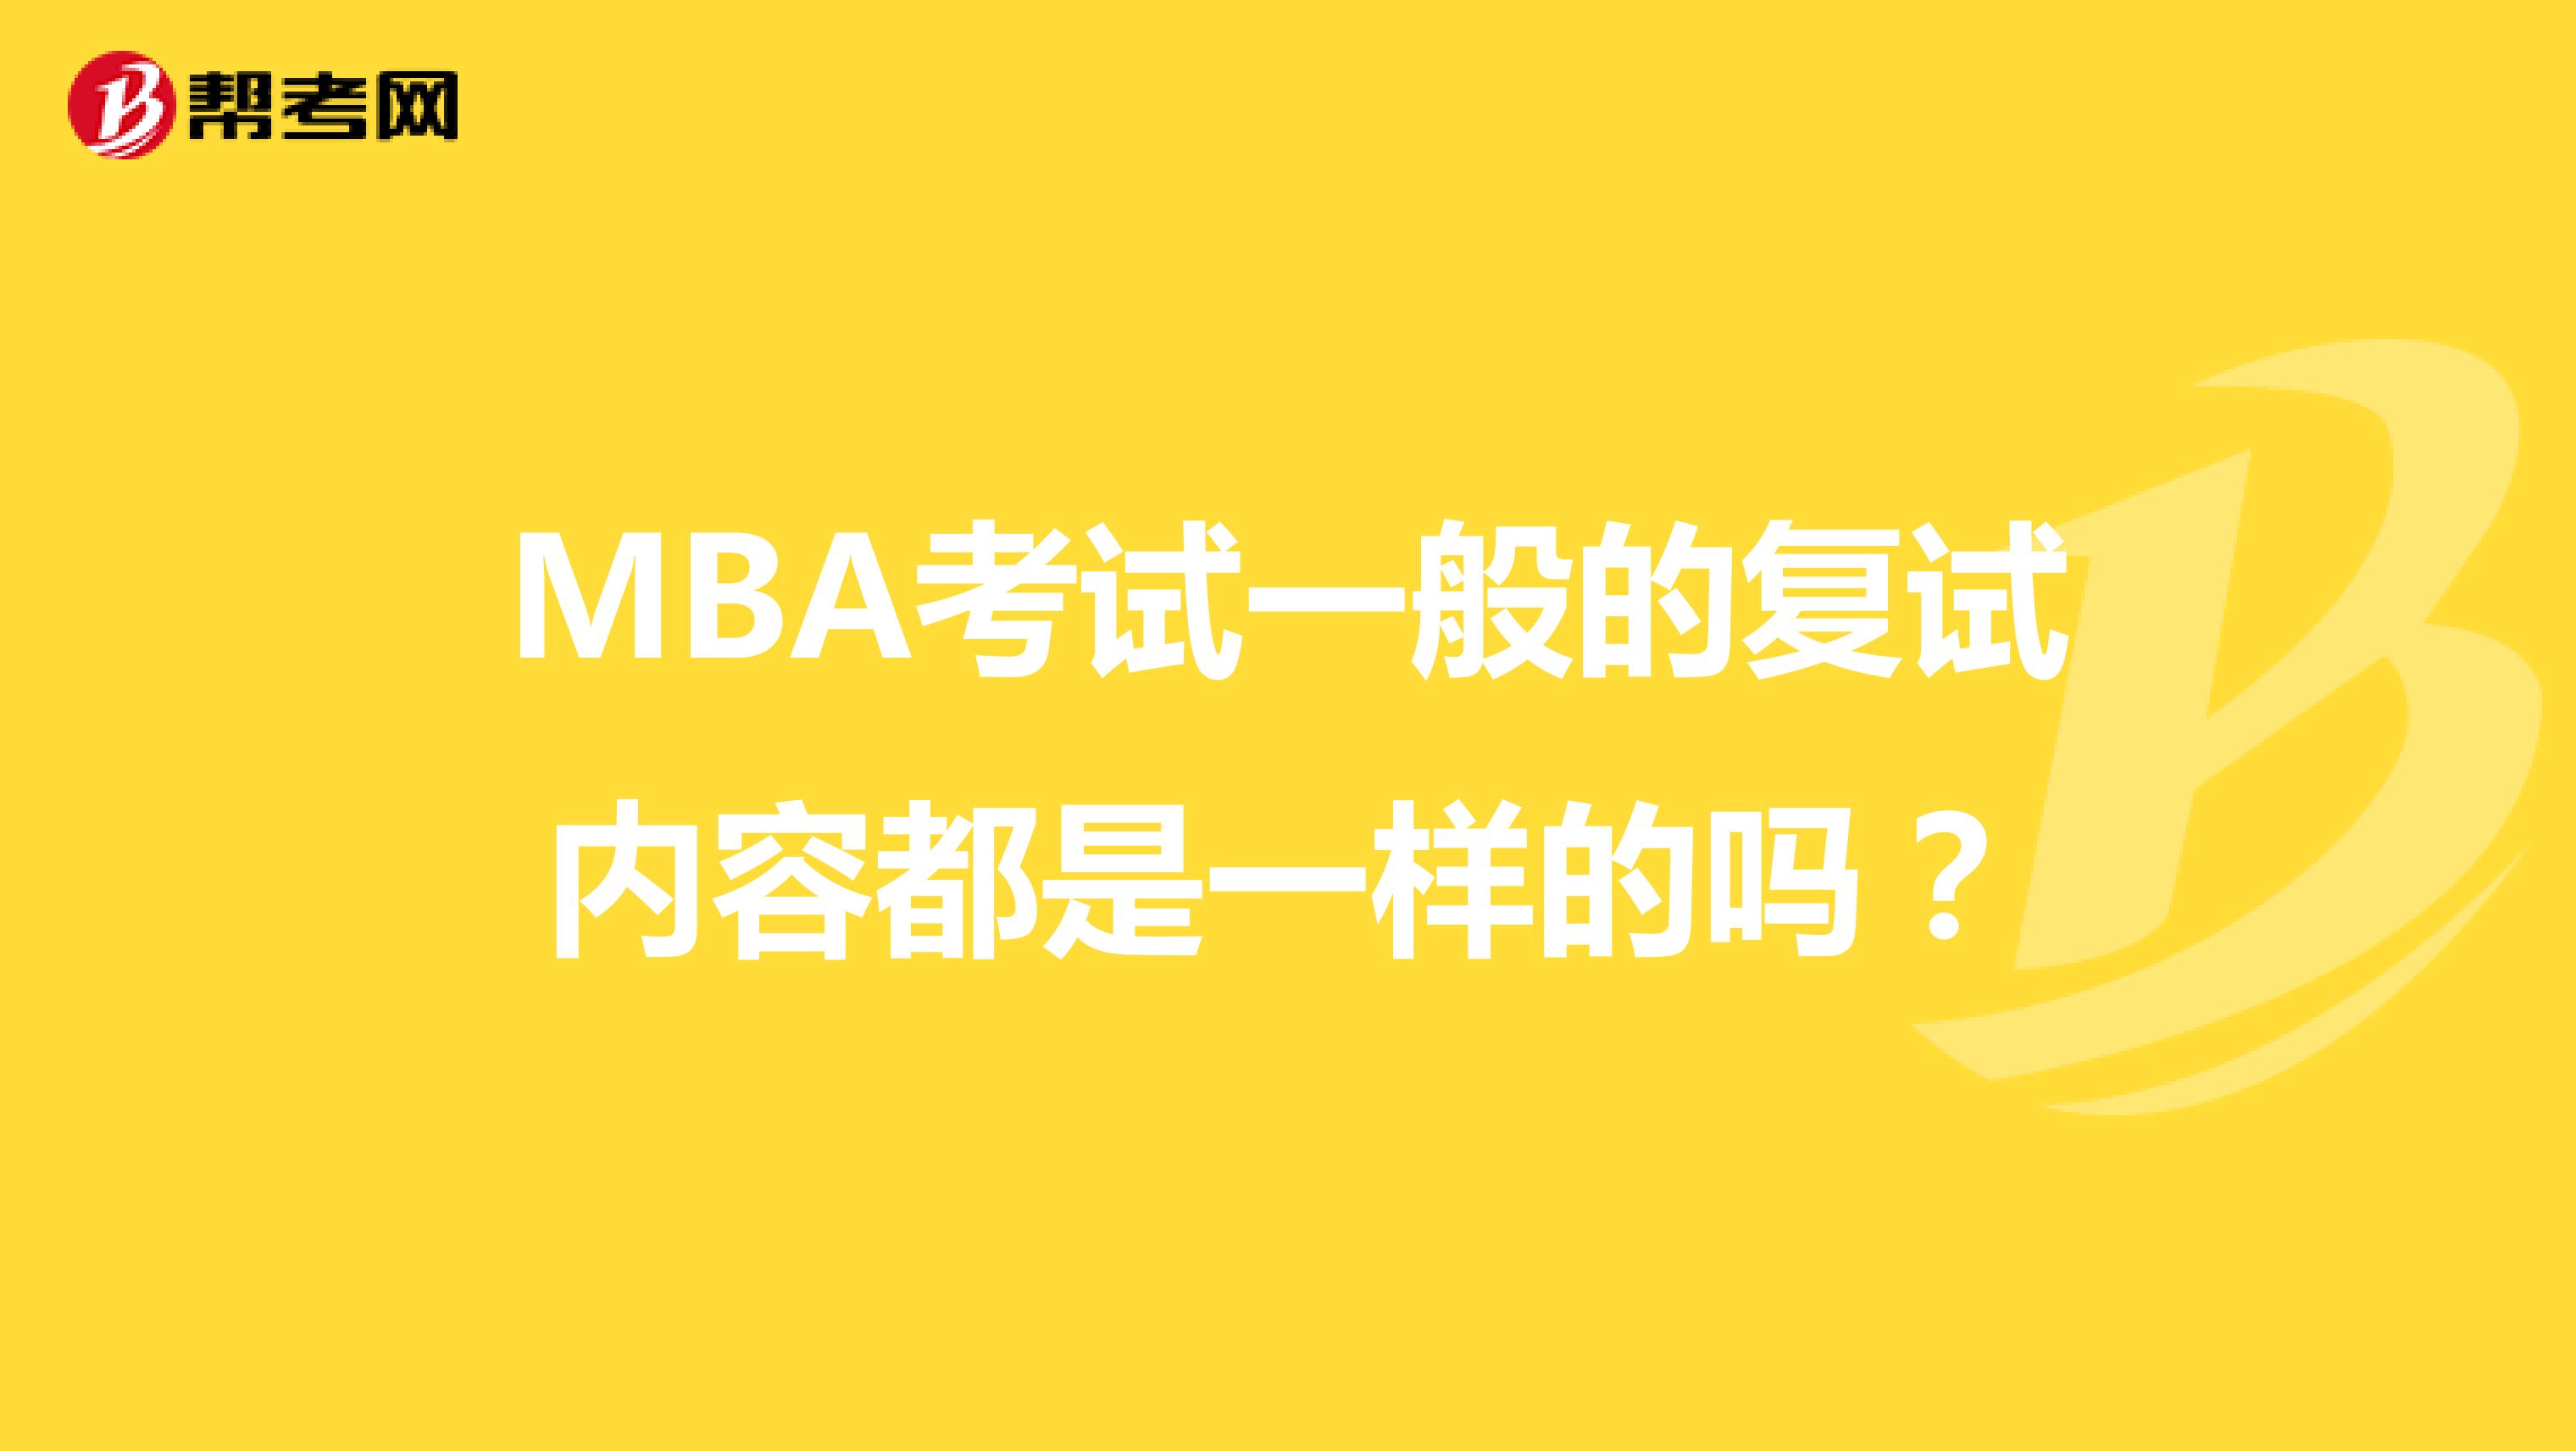 MBA考试一般的复试内容都是一样的吗？